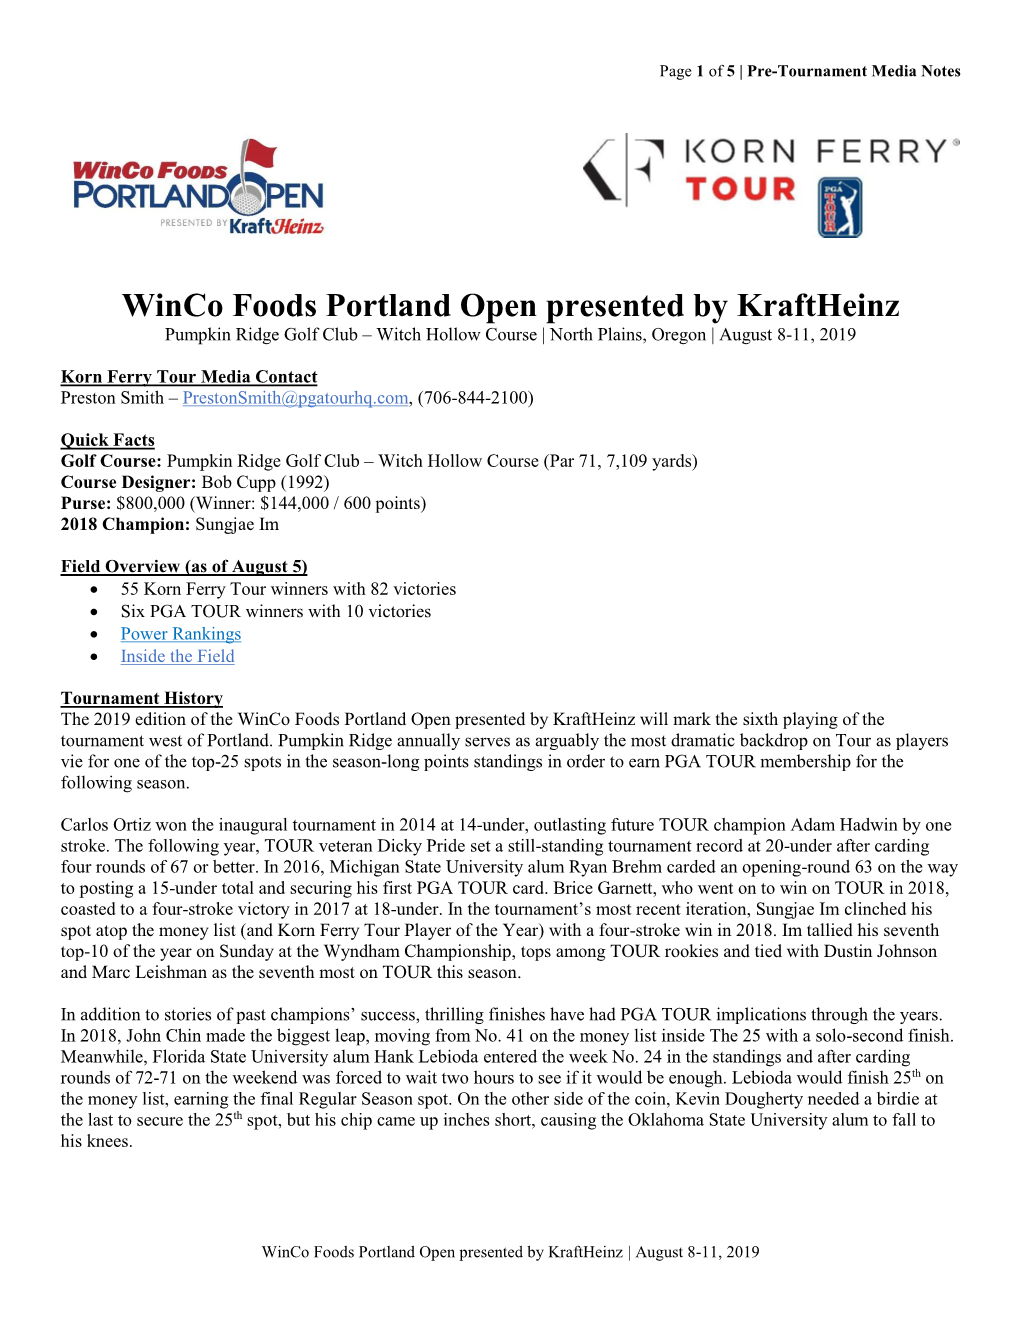 Winco Foods Portland Open Presented by Kraftheinz Pumpkin Ridge Golf Club – Witch Hollow Course | North Plains, Oregon | August 8-11, 2019